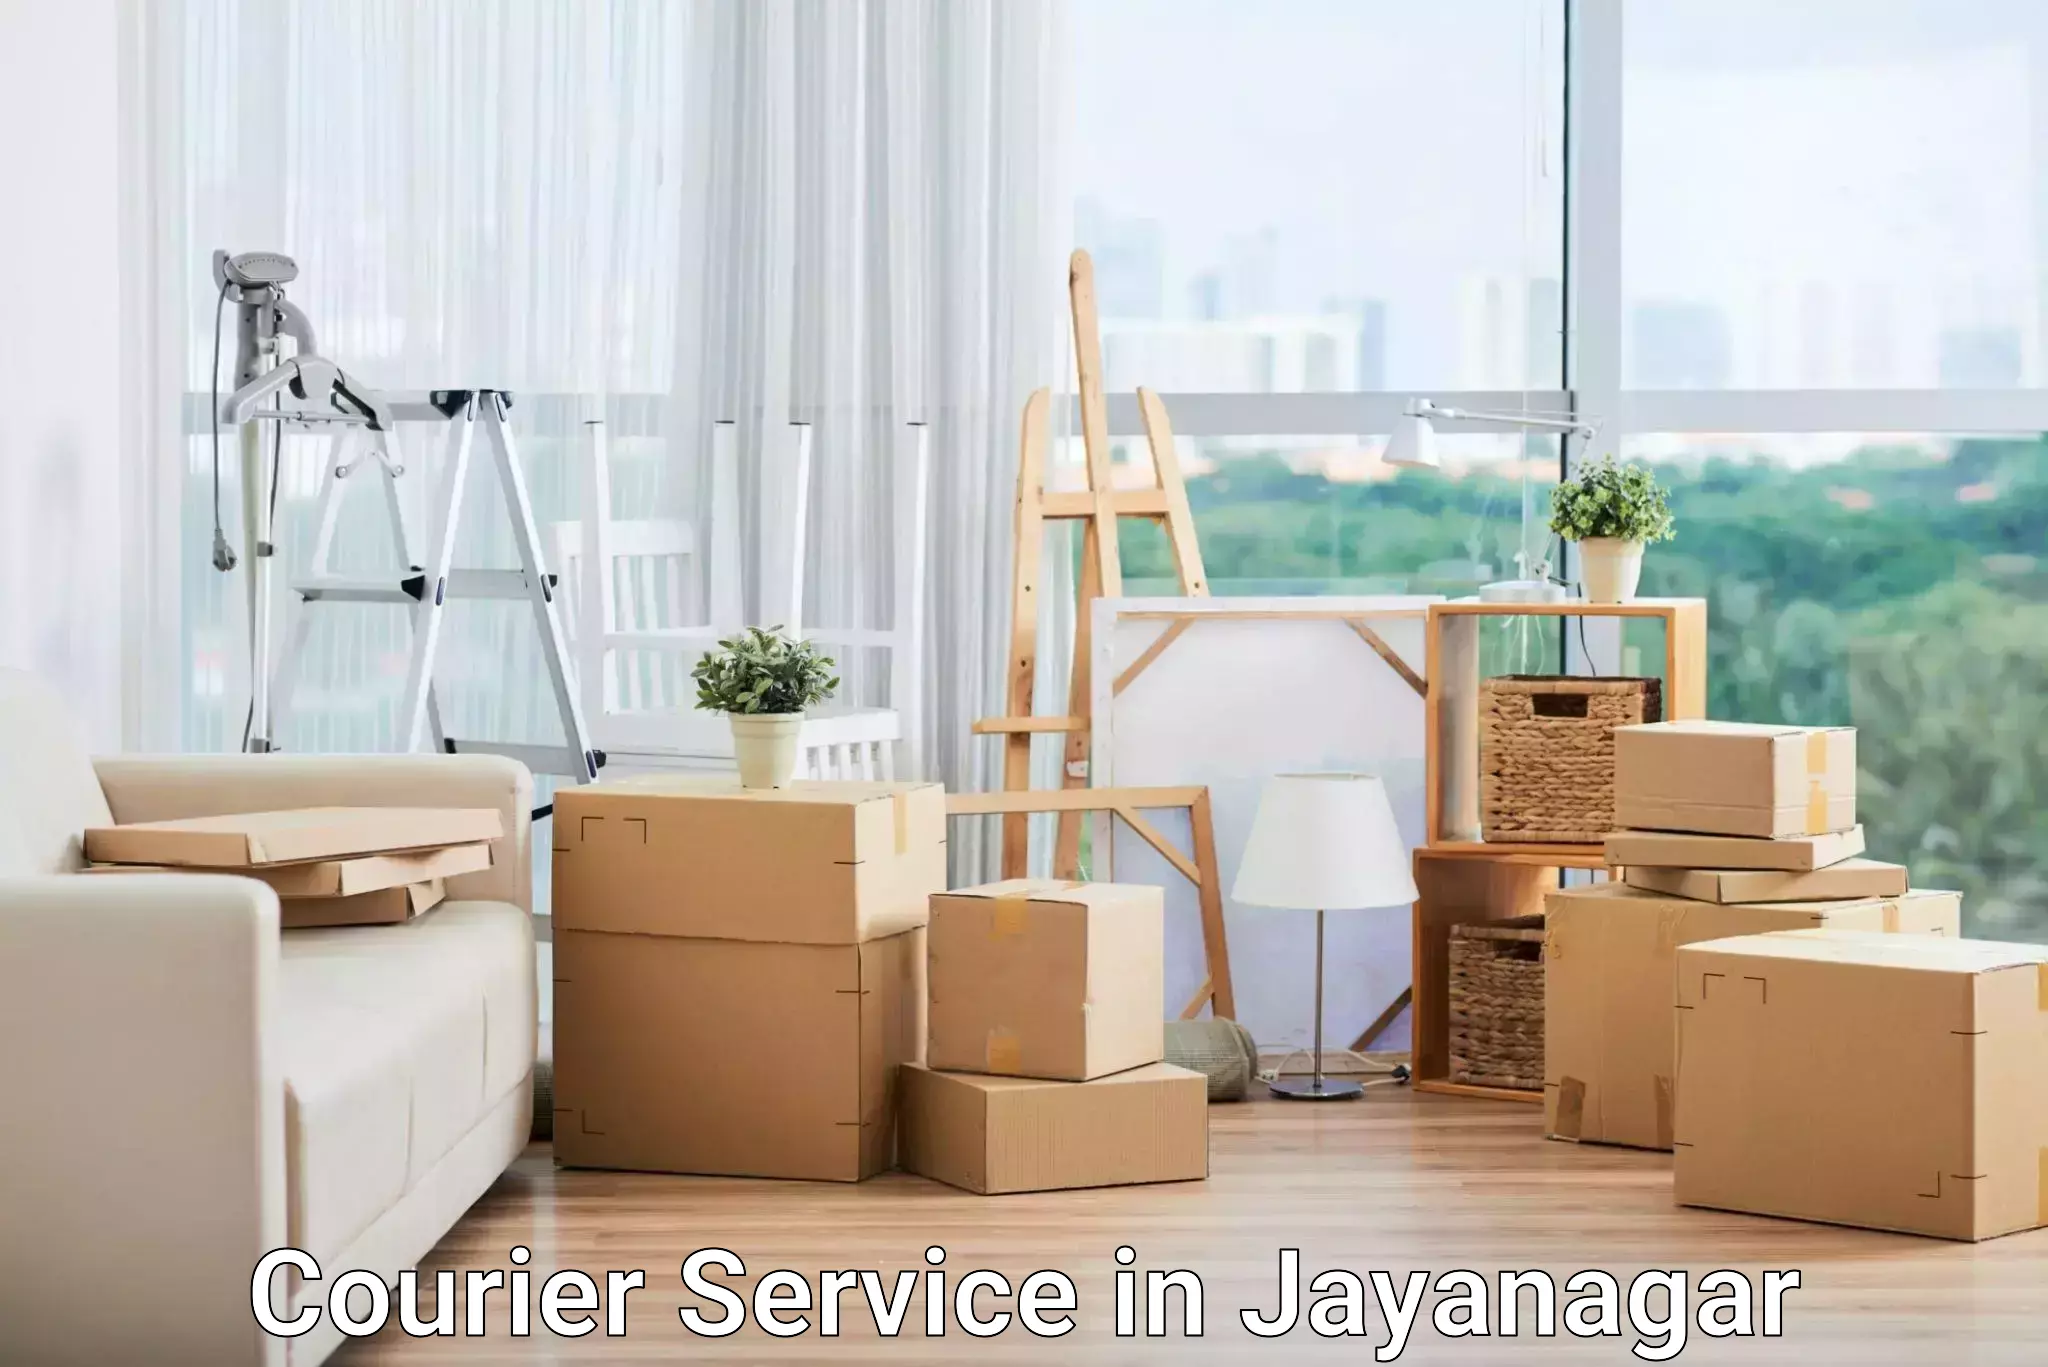 User-friendly delivery service in Jayanagar